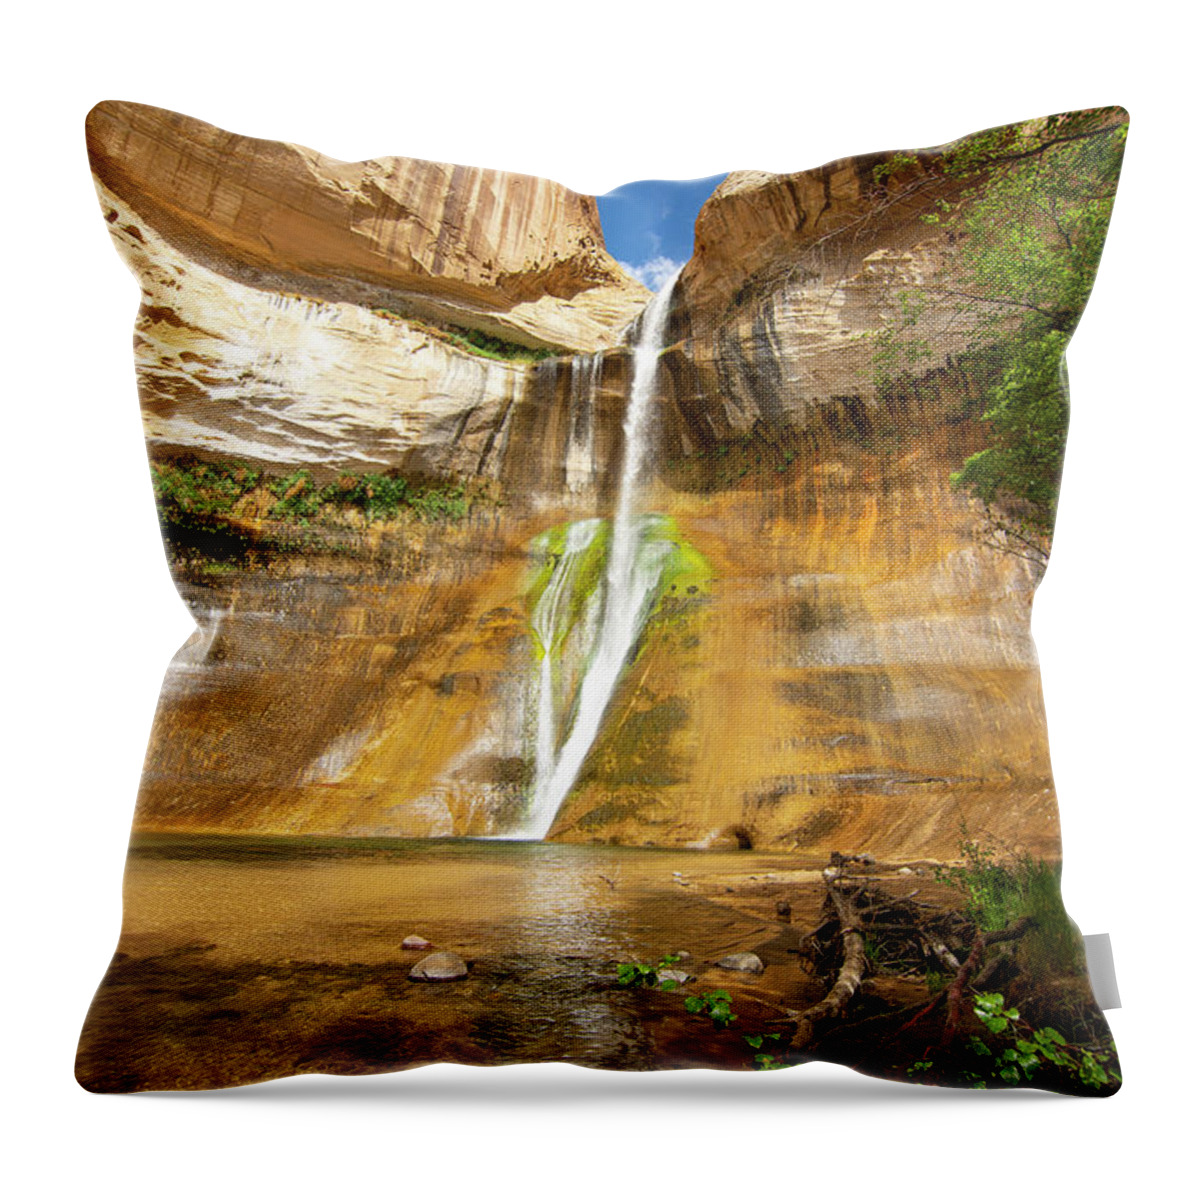 Utah Throw Pillow featuring the photograph Calf Creek Falls Vertical by Aaron Spong